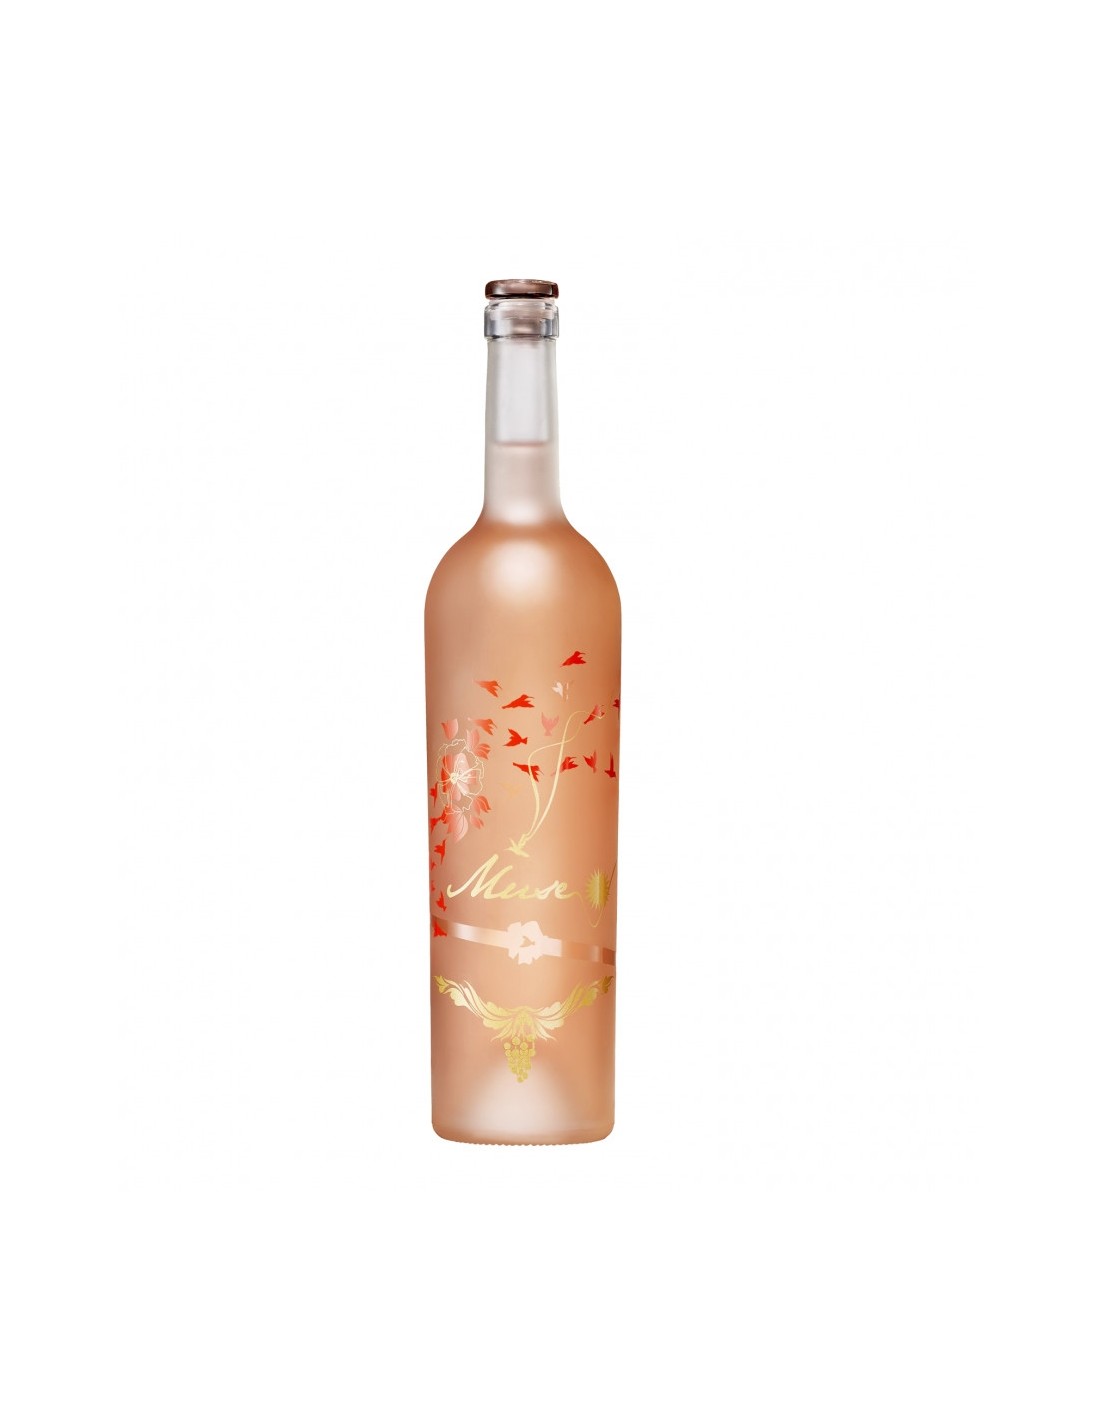 Vin roze sec, Muse Day Recas, 0.75L, 12.5% alc., Romania alcooldiscount.ro